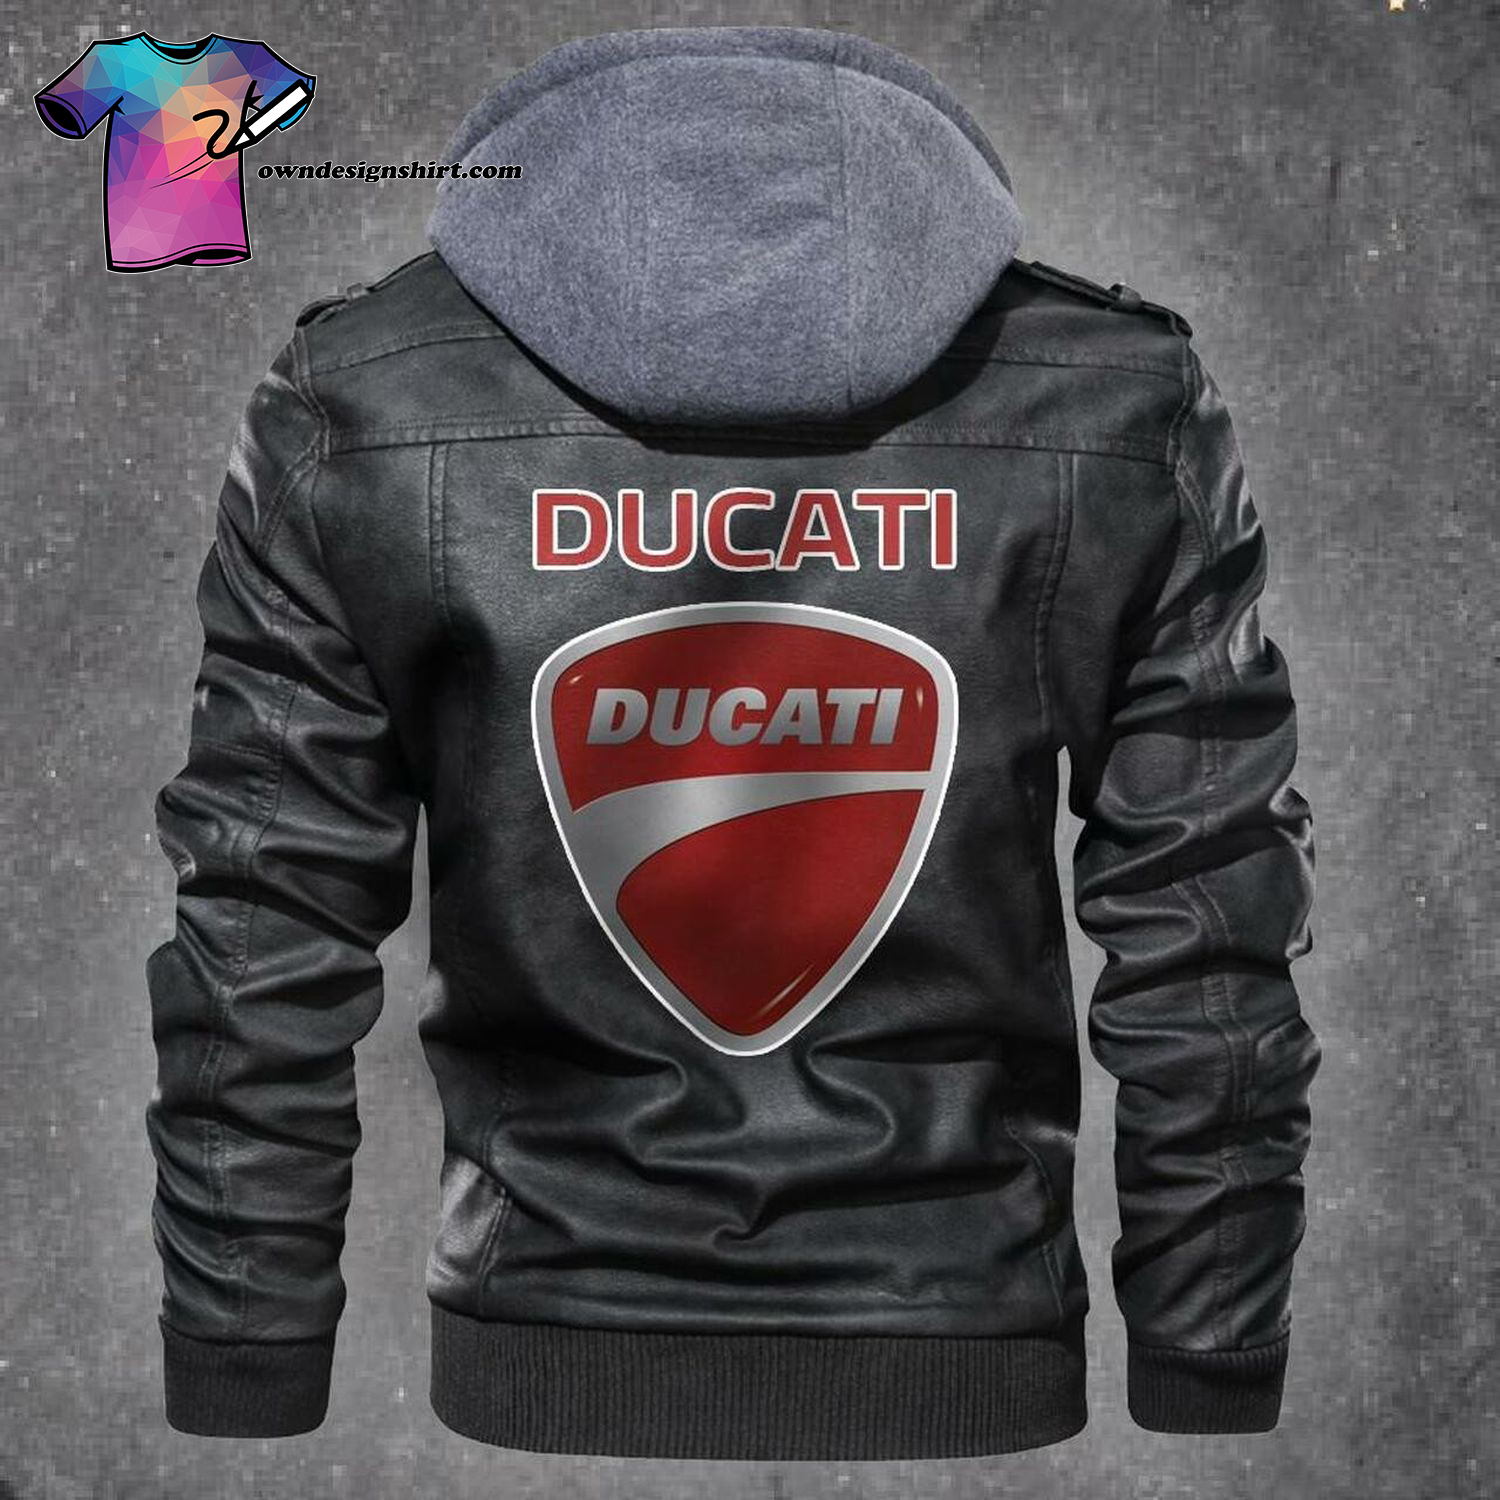 Ducati Motorcycle Symbol Leather Jacket